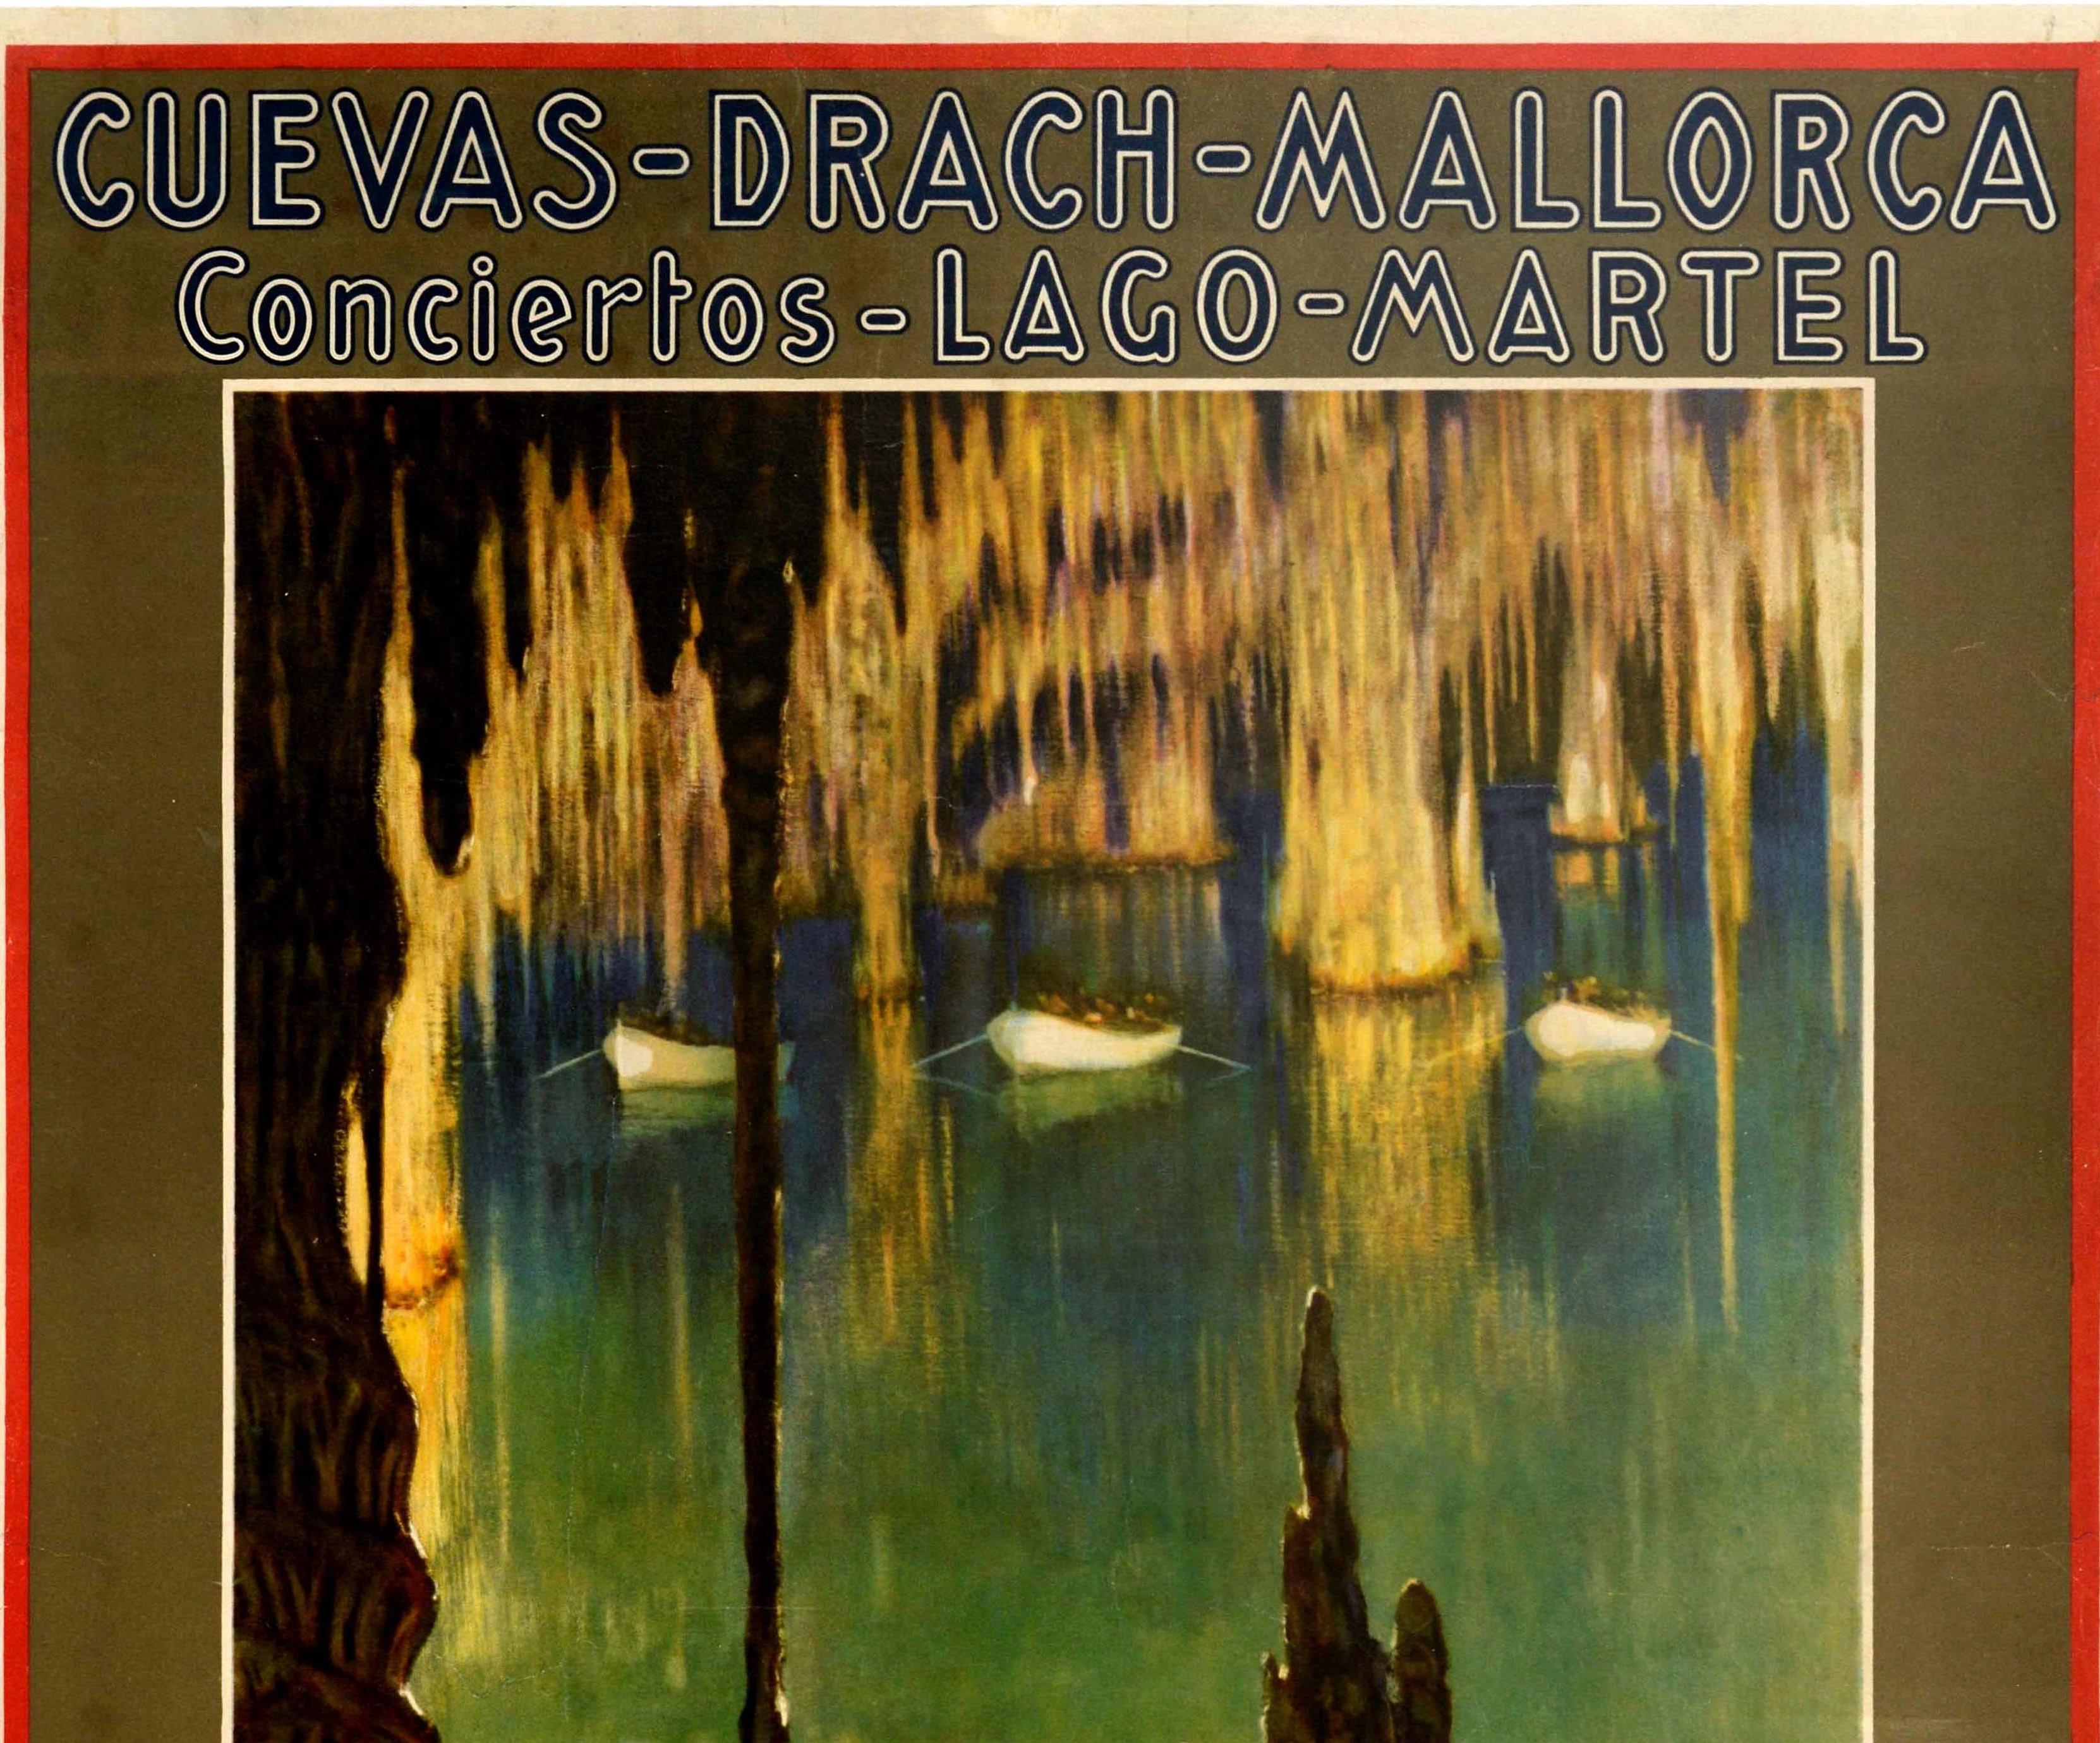 Original Vintage Travel Poster Mallorca Cuevas Drach Caves Lake Martel Concerts - Print by Erwin Hubert